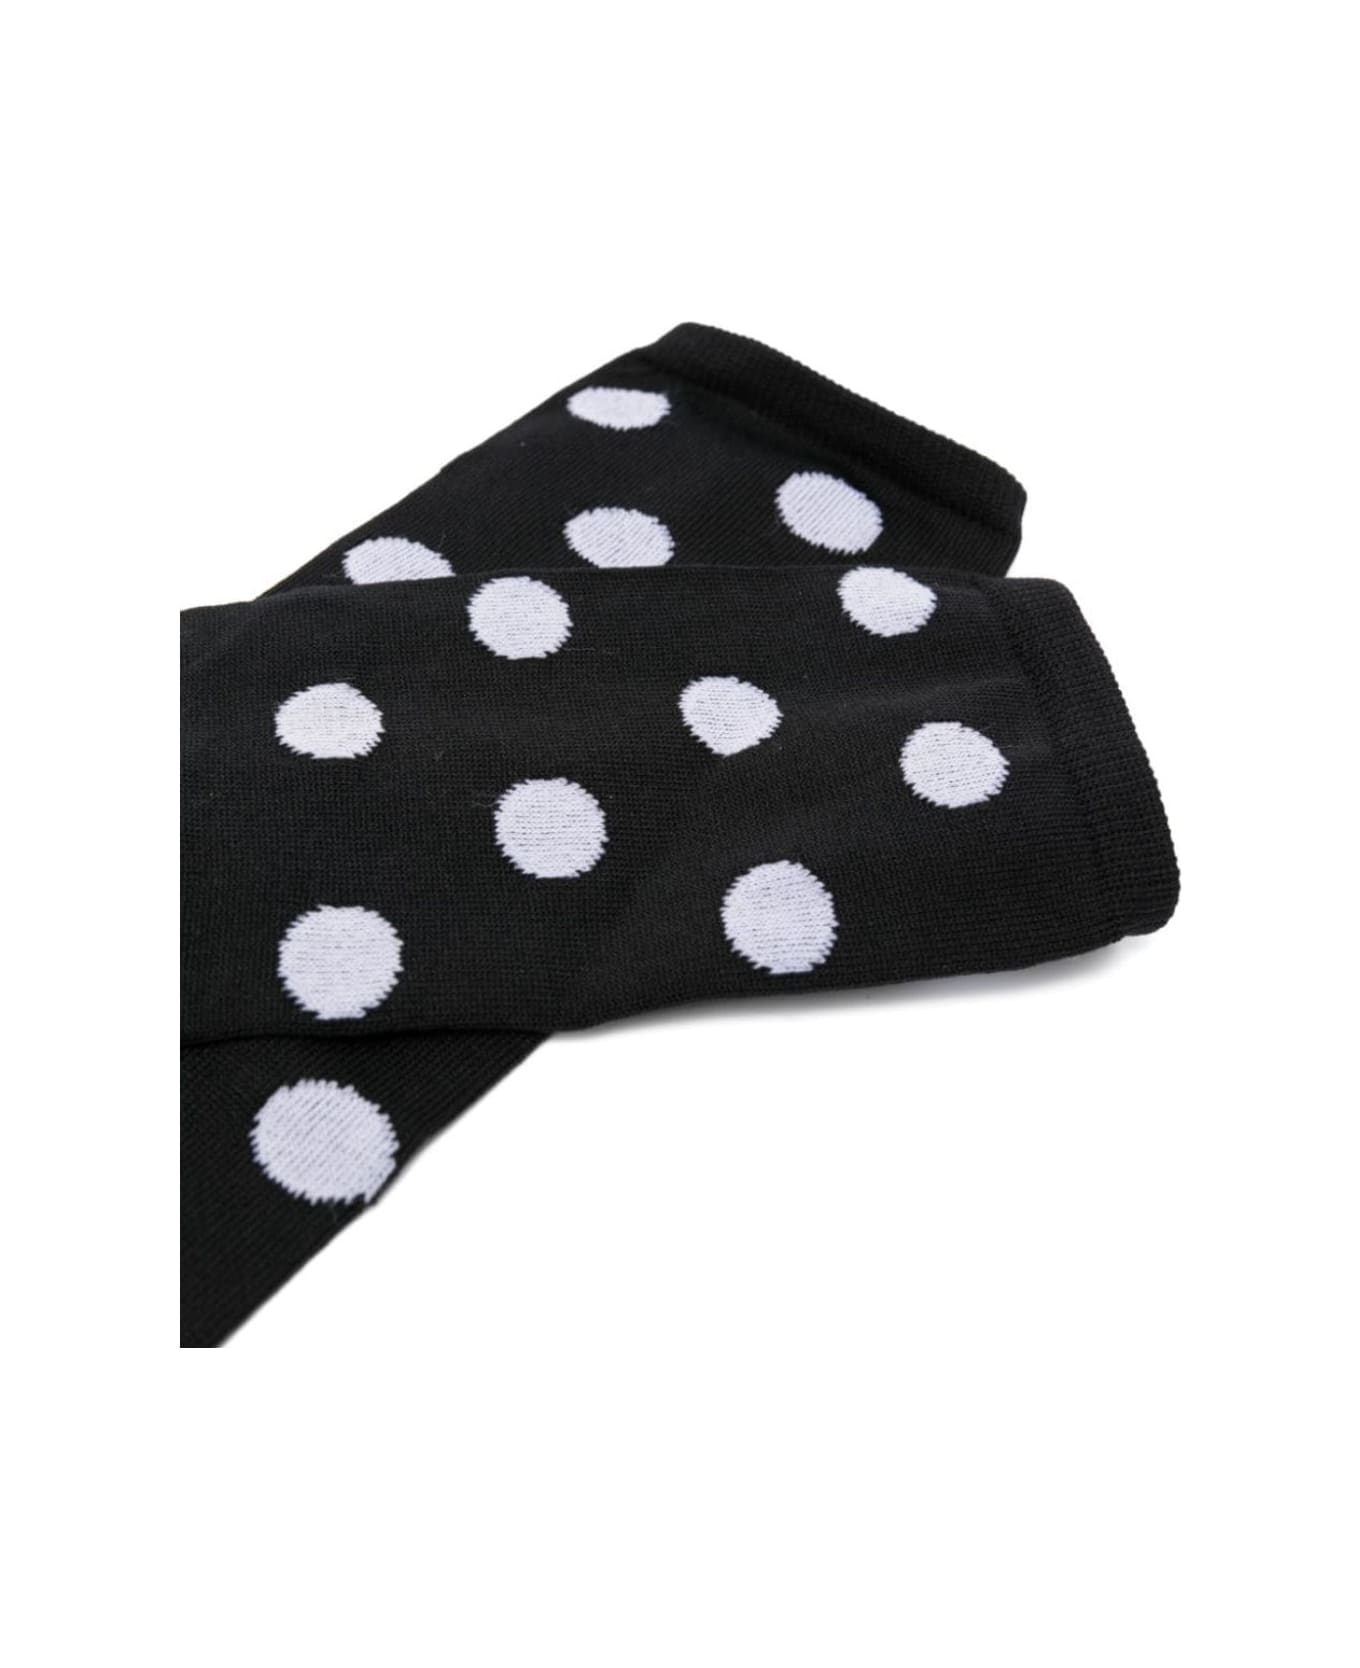 Marni Jacquard Small Polka Dots Socks - Black